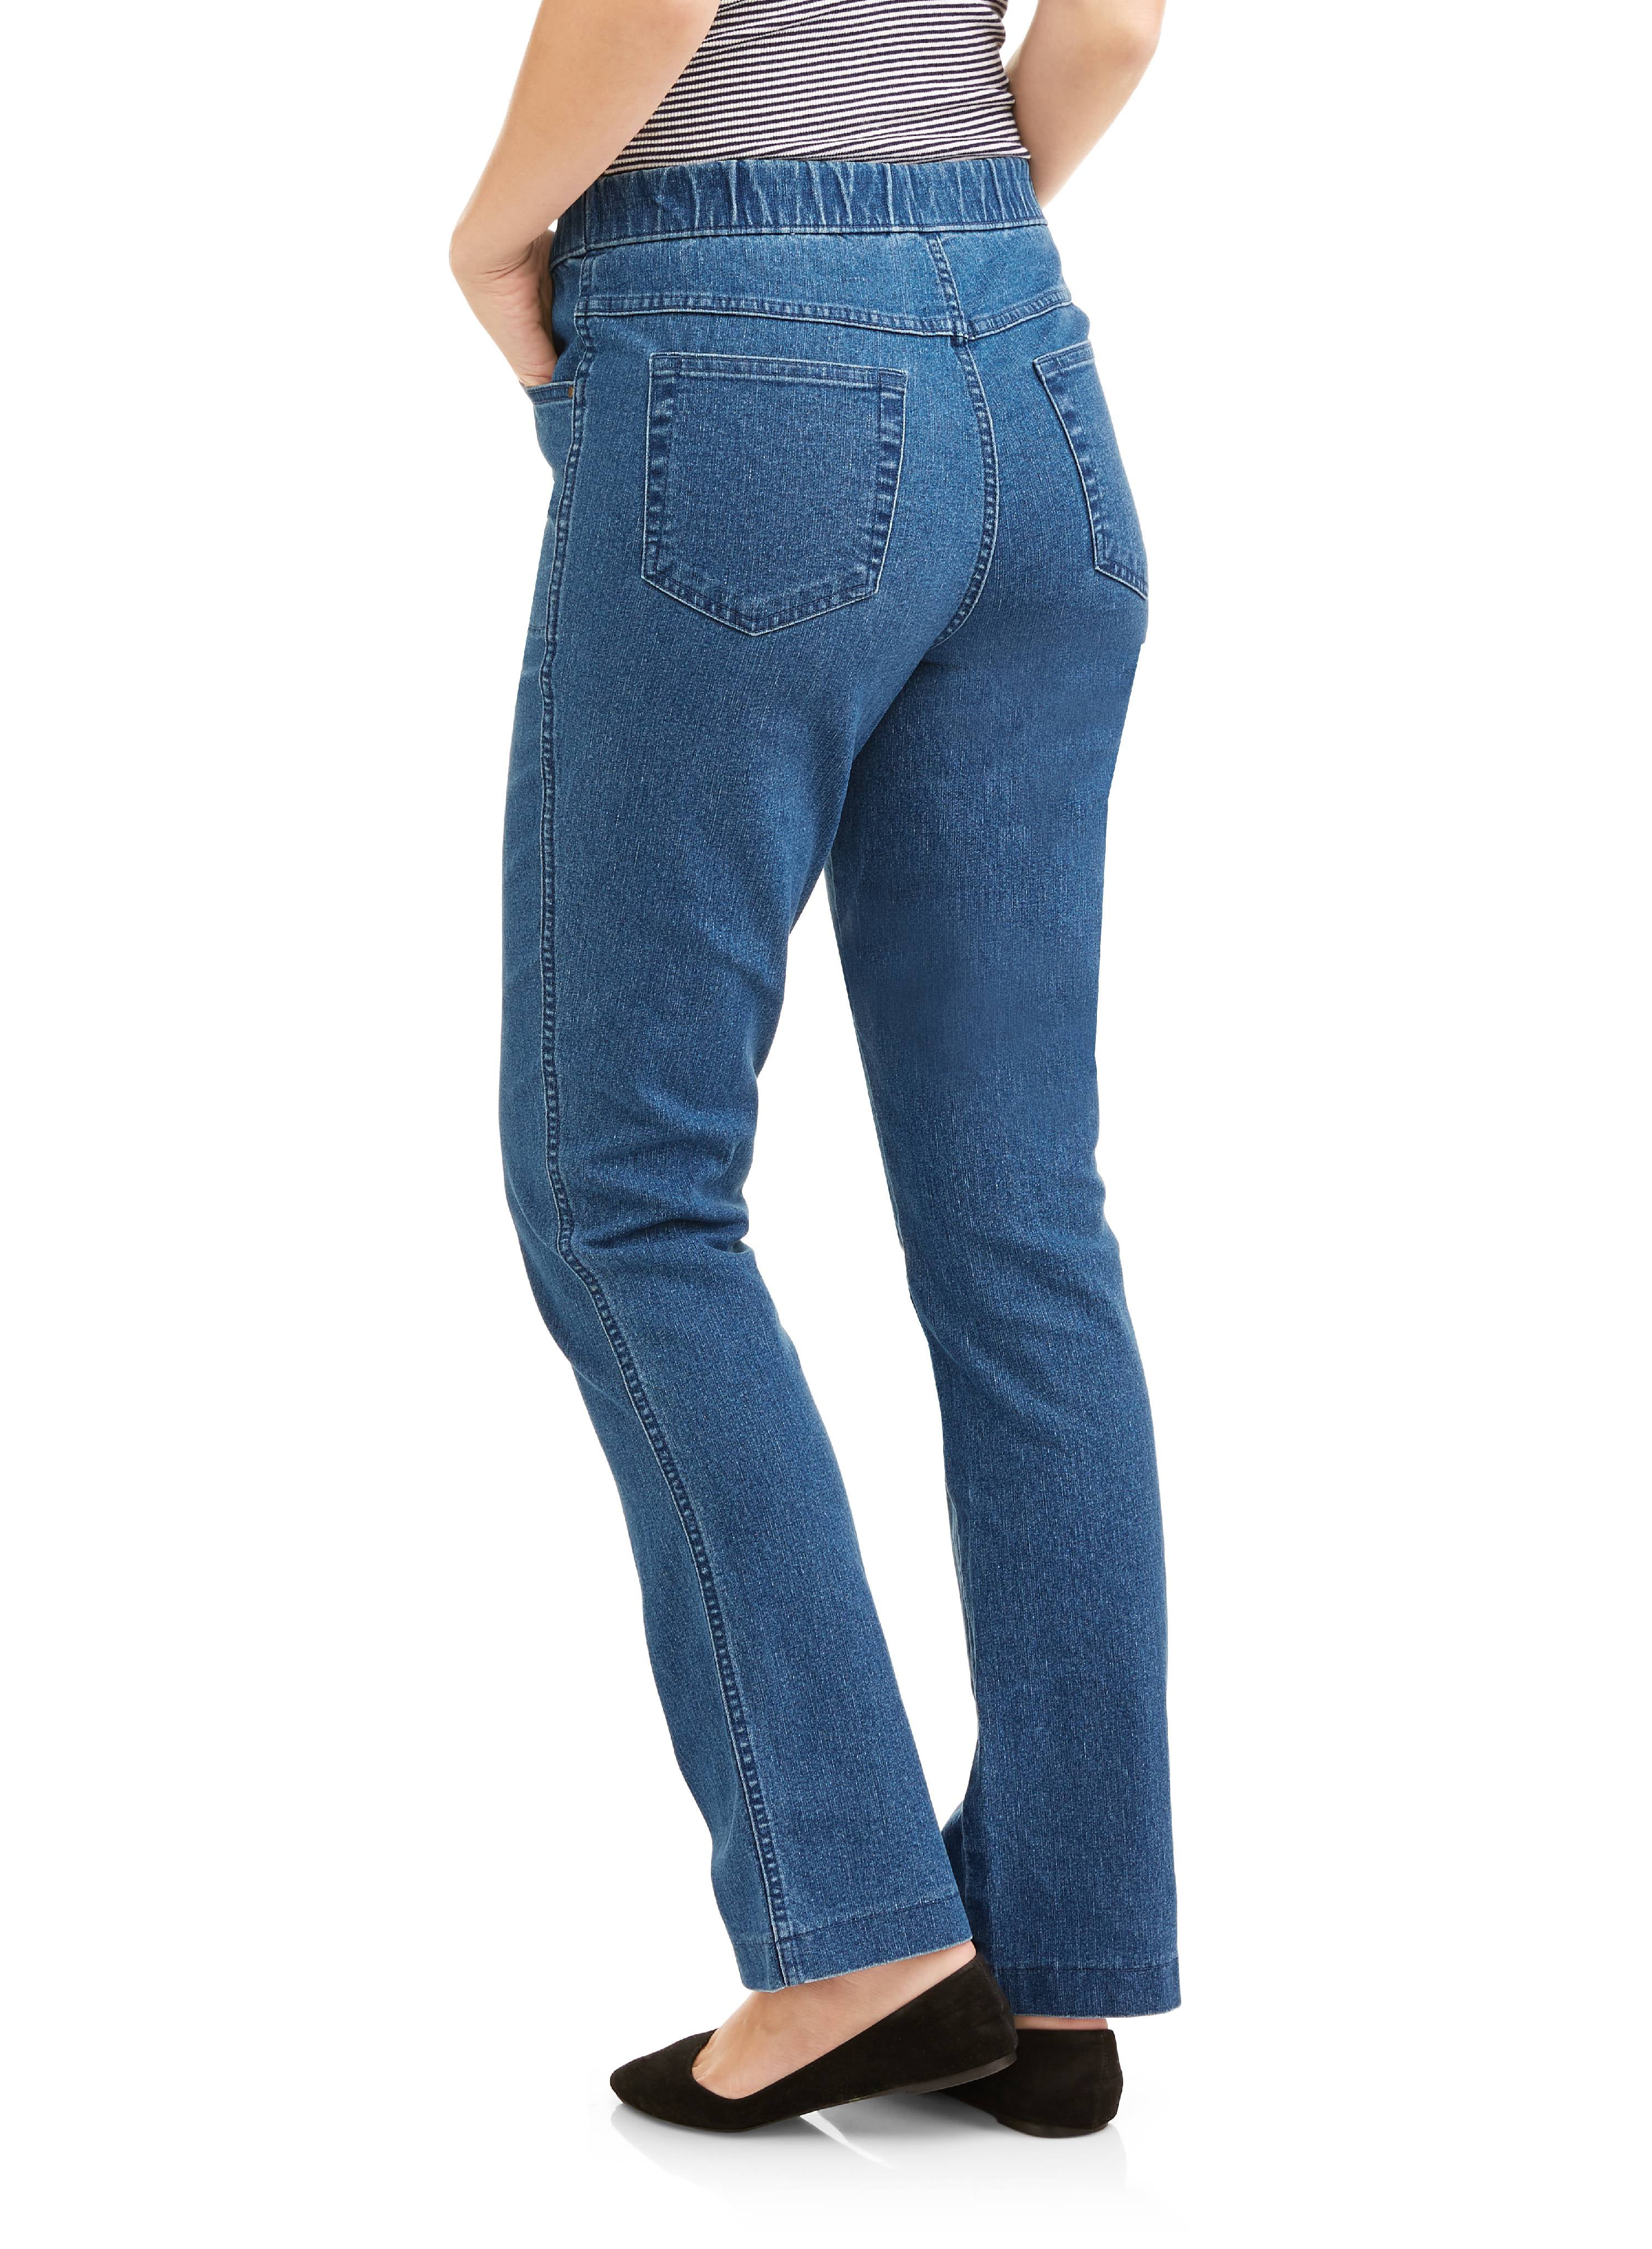 RealSize - Women's Stretch Denim Pull-On Bootcut Jeans - Walmart.com